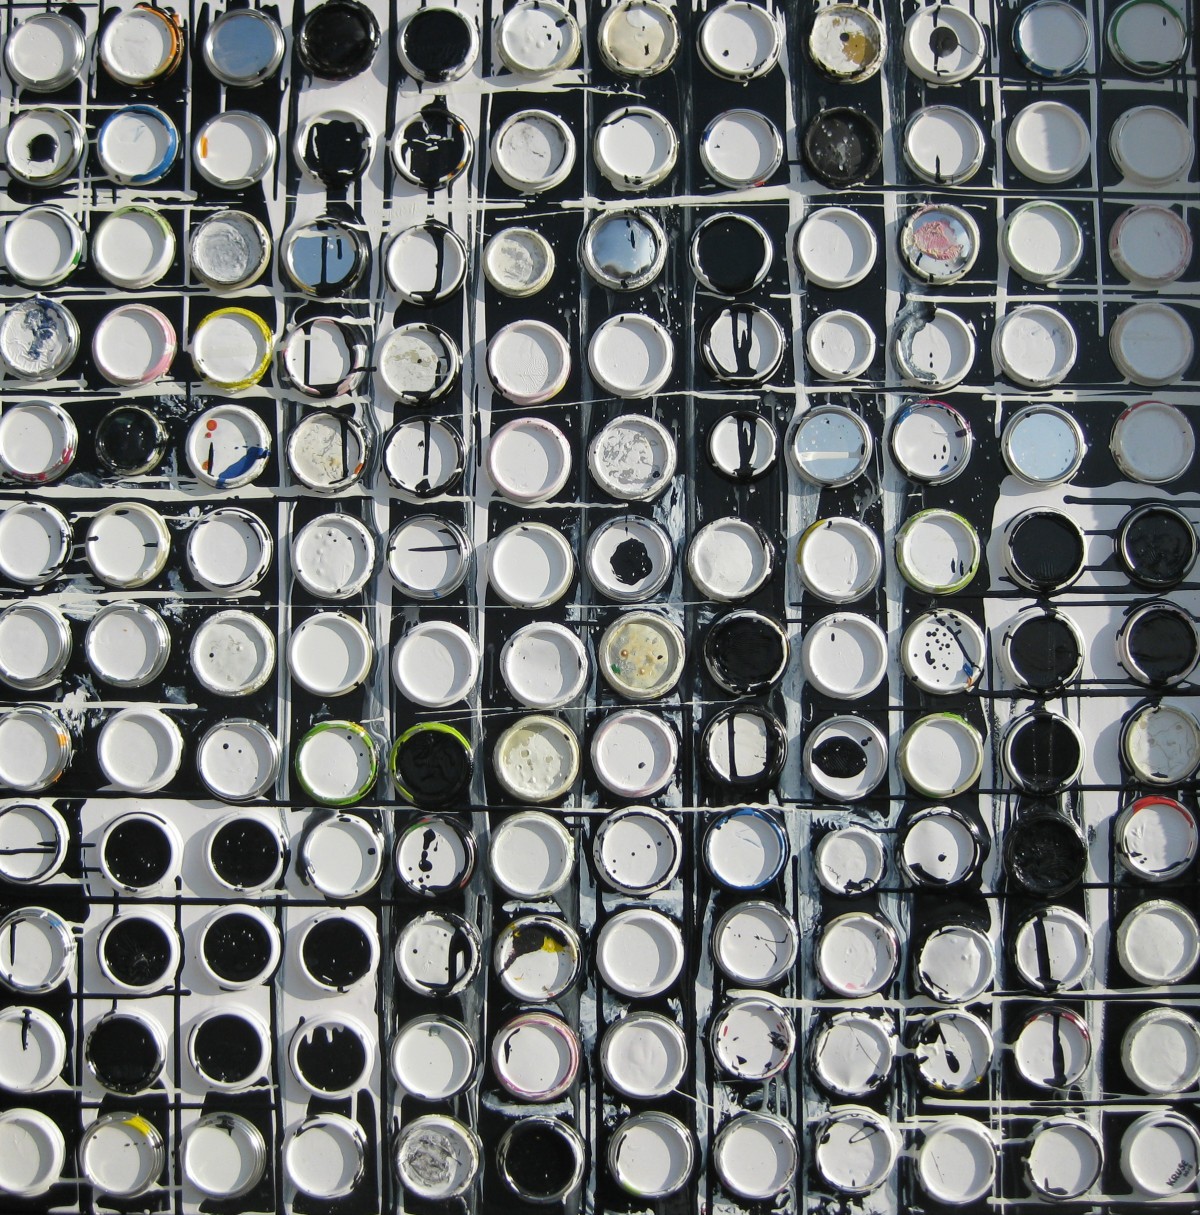 Lackdosendeckel, Acrylat auf Leinwand, 160 cm x 160 cm, 2013